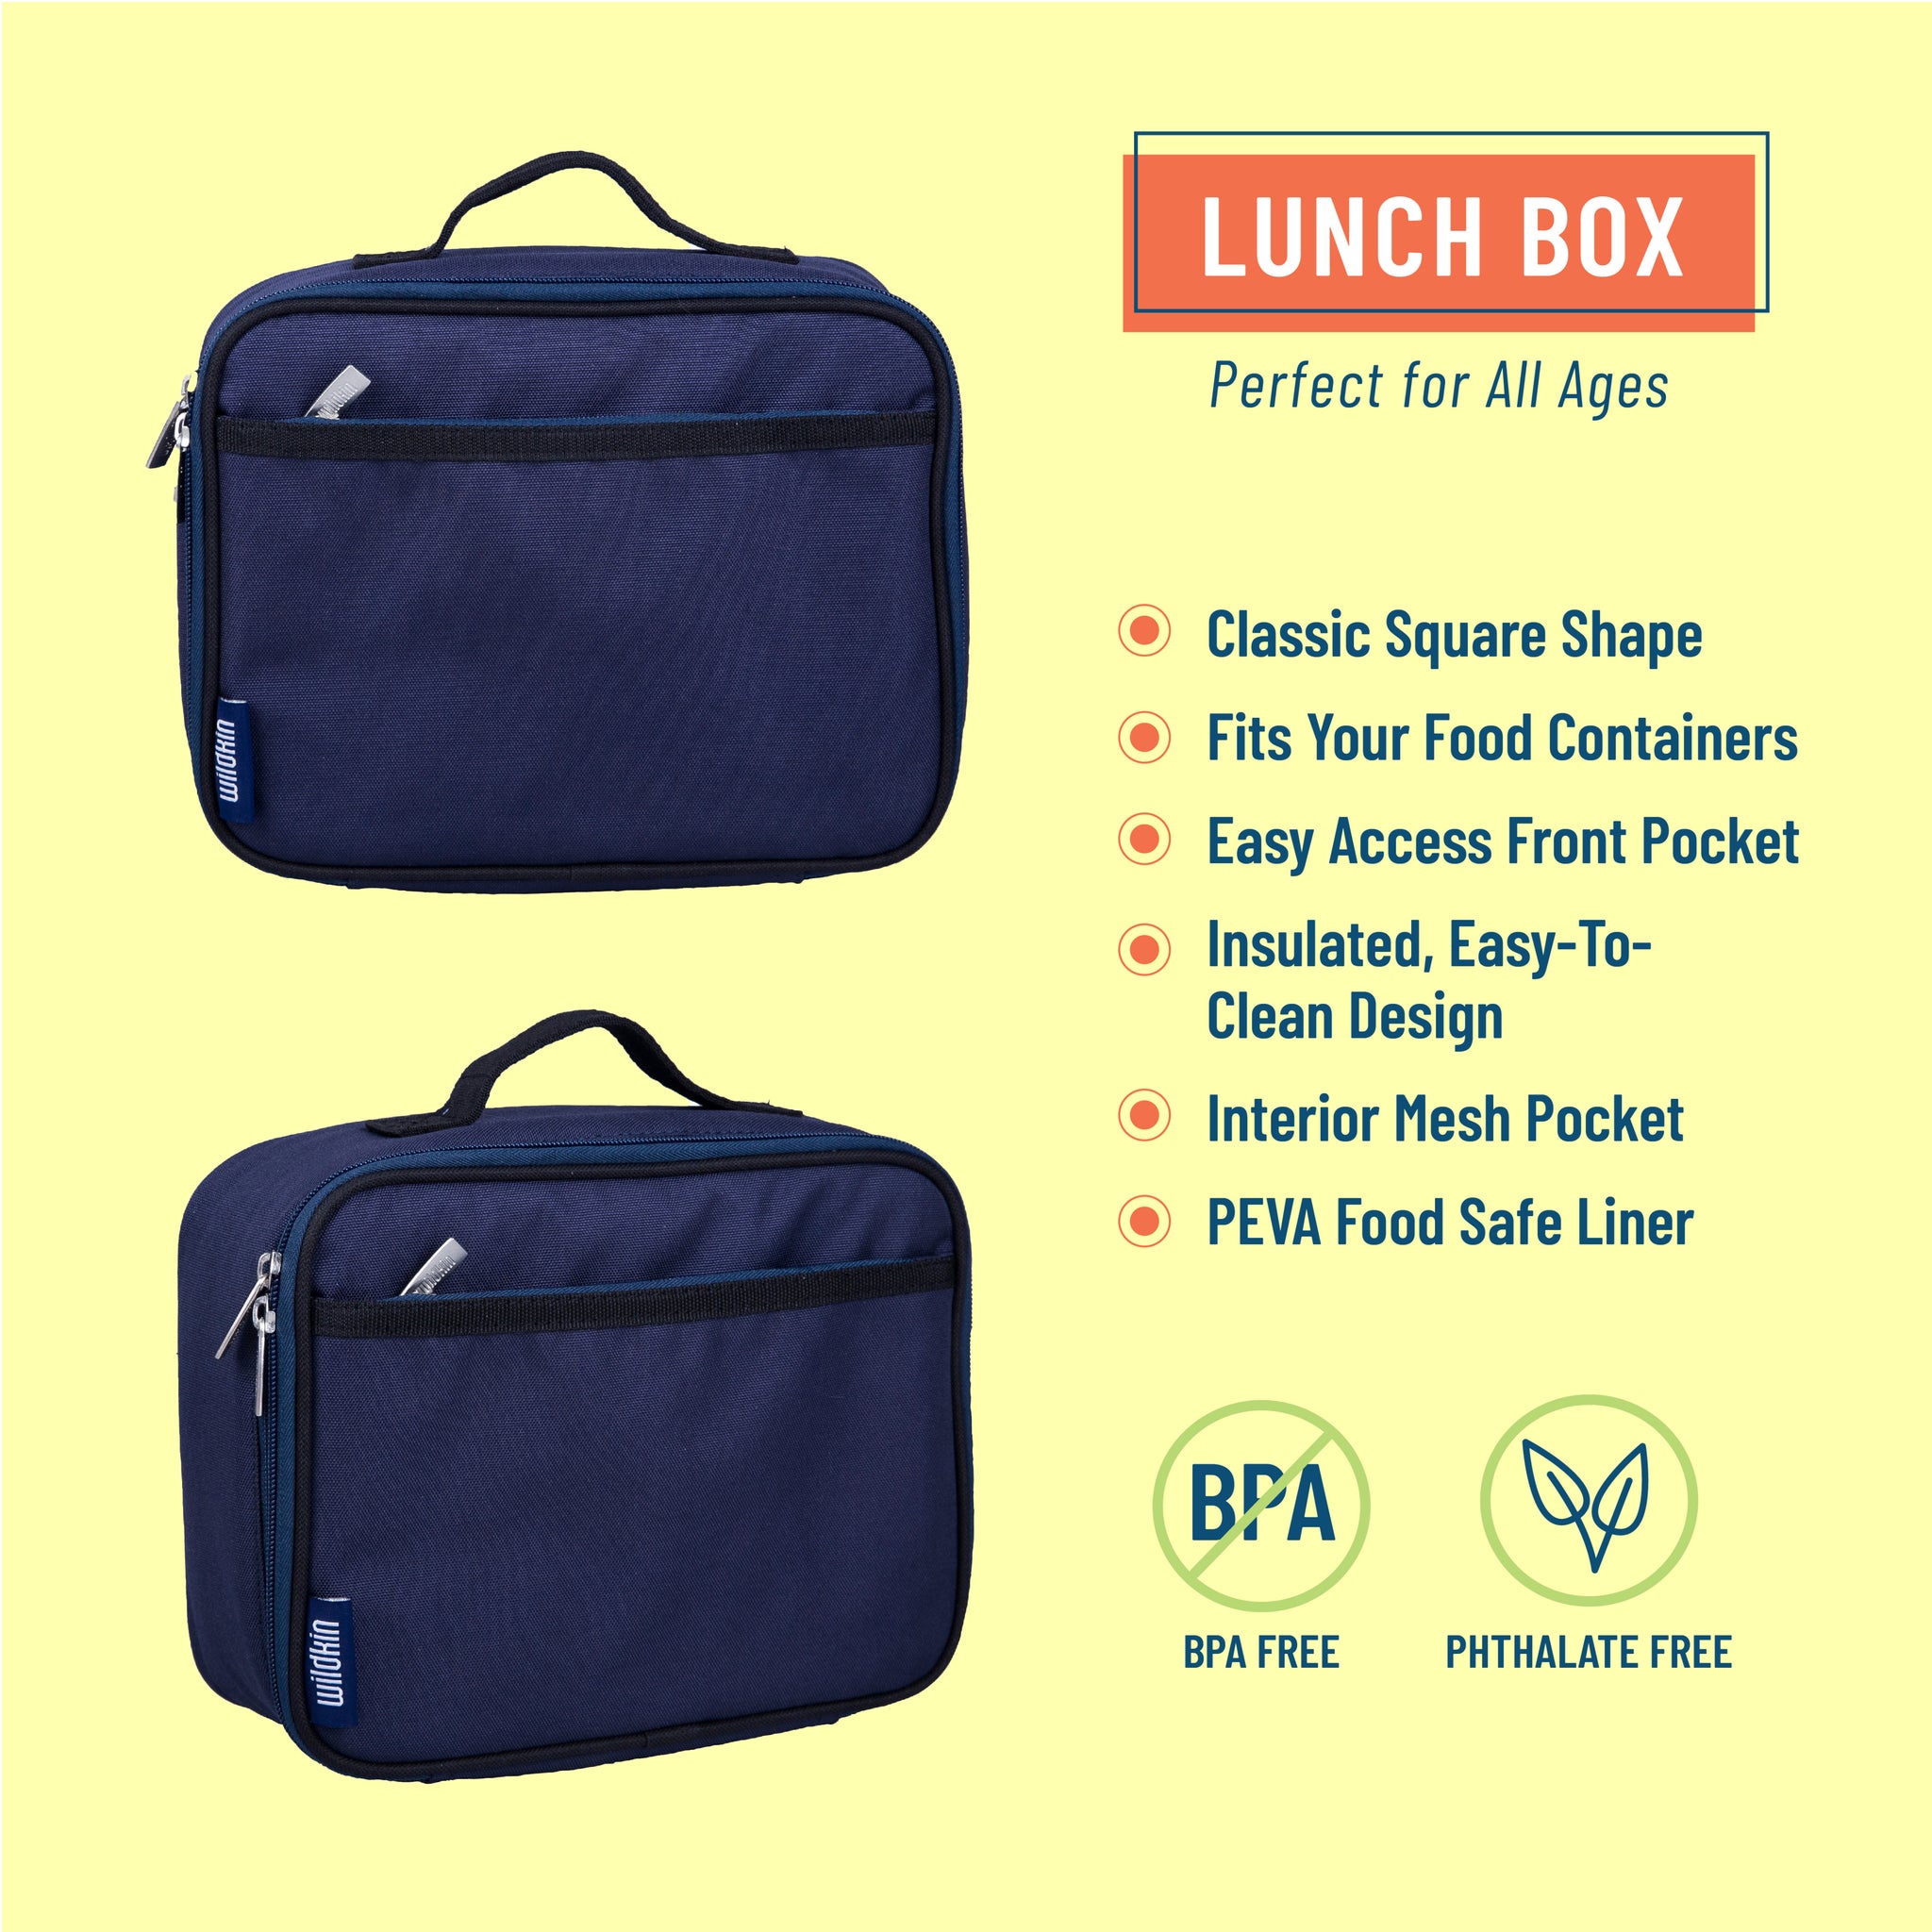 Plastic Chips Box for Boys School Lunch Box Organizer - Blue Whale